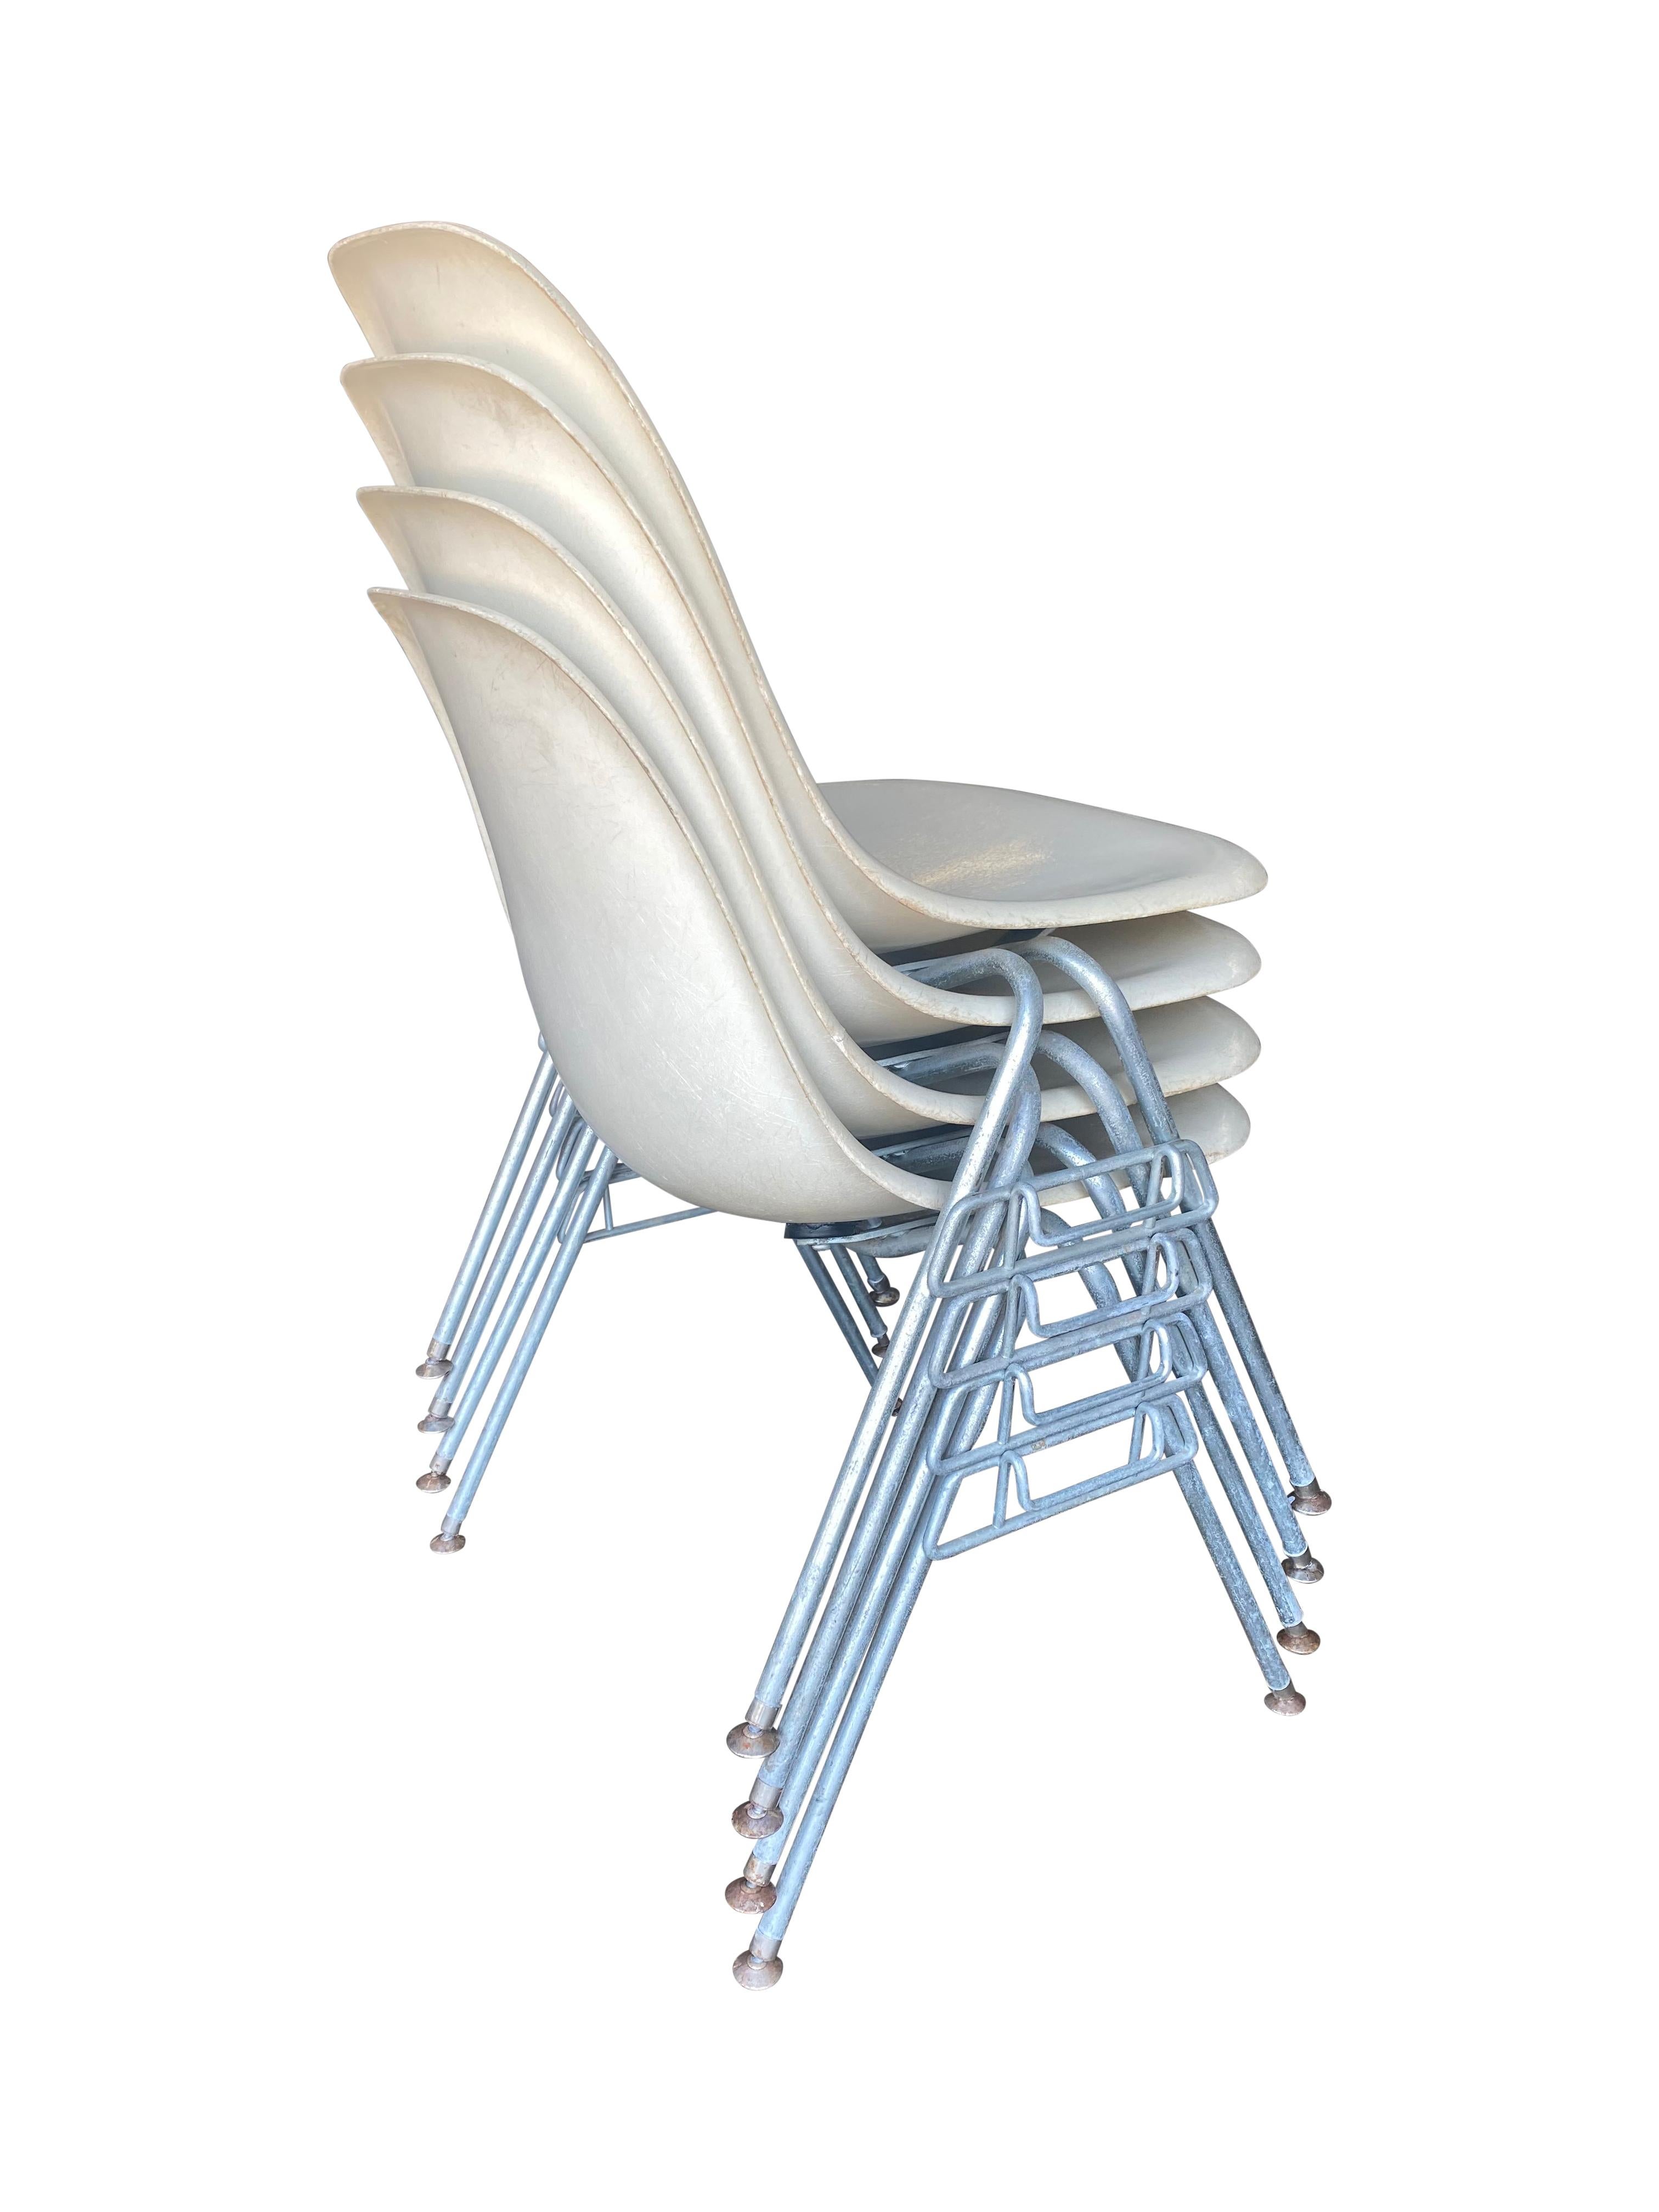 fiberglass stacking chairs